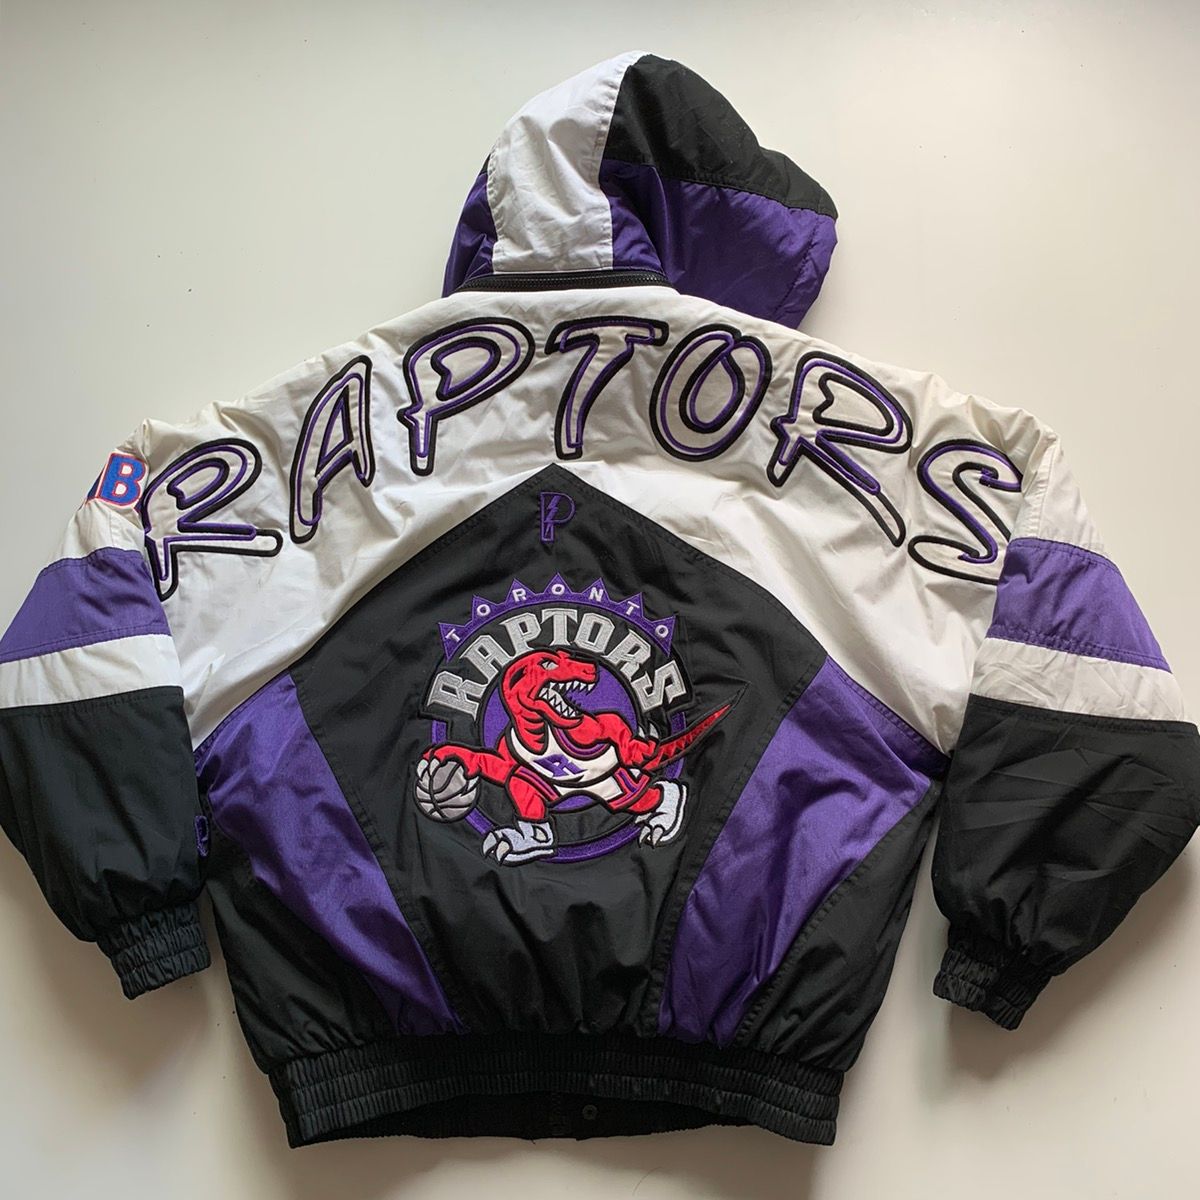 Vintage Vintage 1994 Toronto Raptors pro player Jacket Size US M / EU 48-50 / 2 - 1 Preview